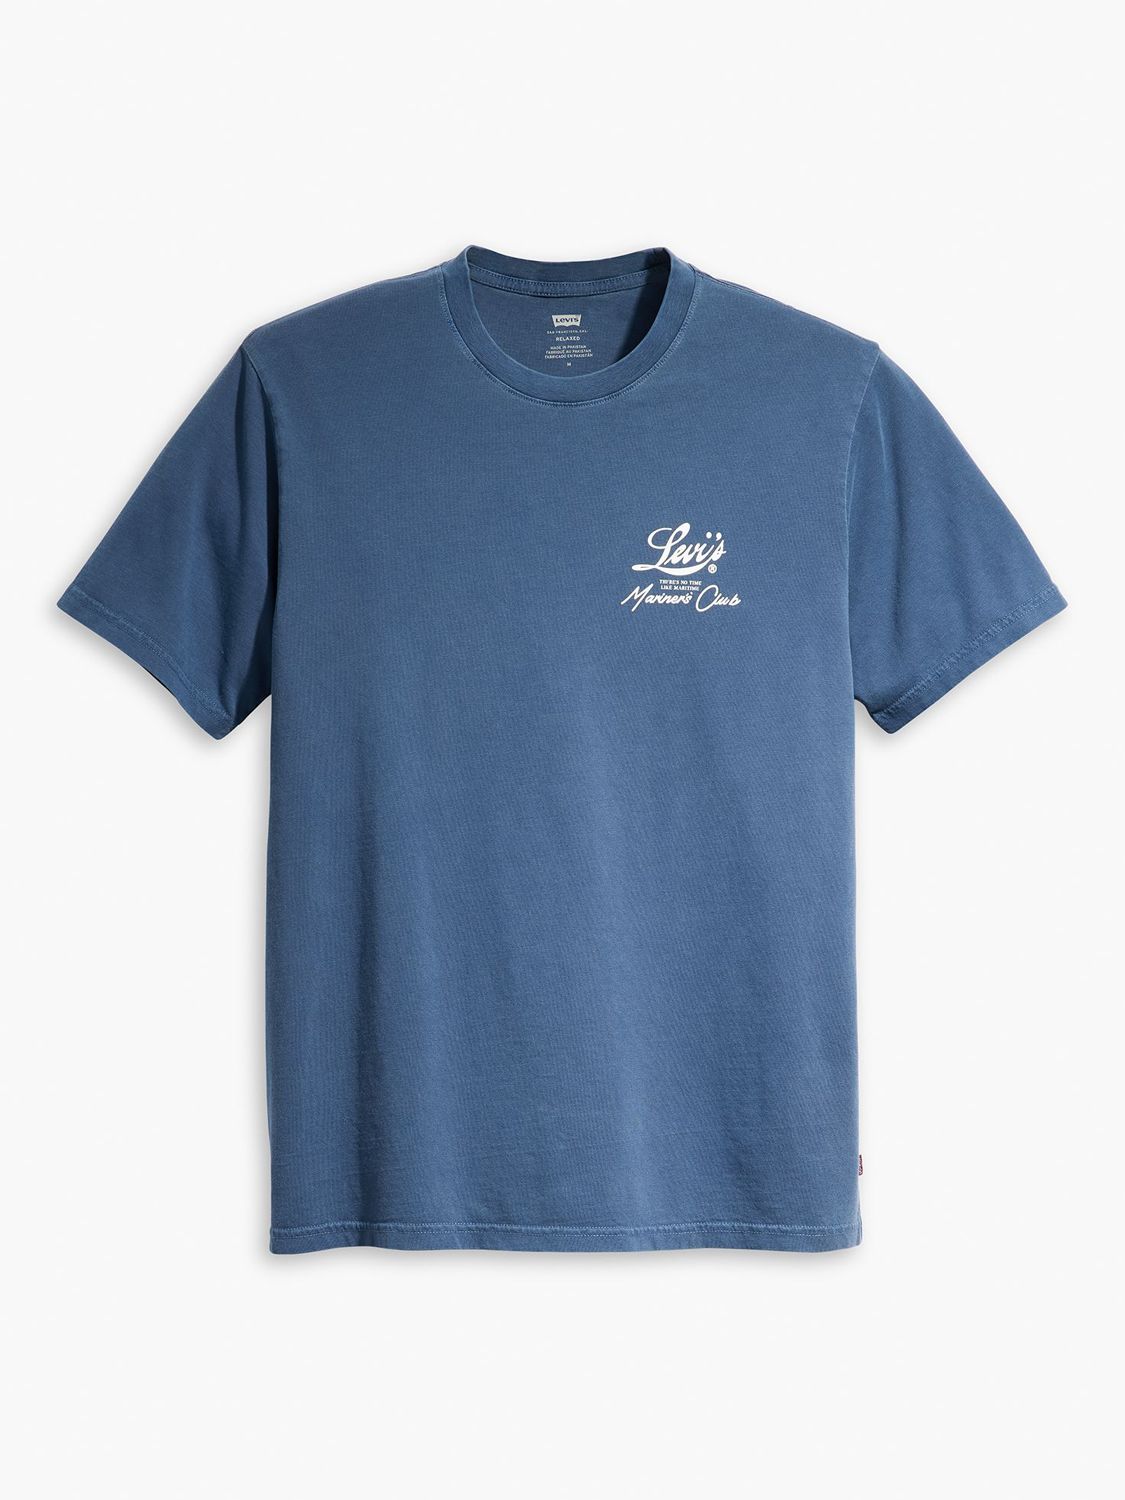 Levi's Short Sleeve Relaxed Fit T-Shirt, Vintage Indigo, L